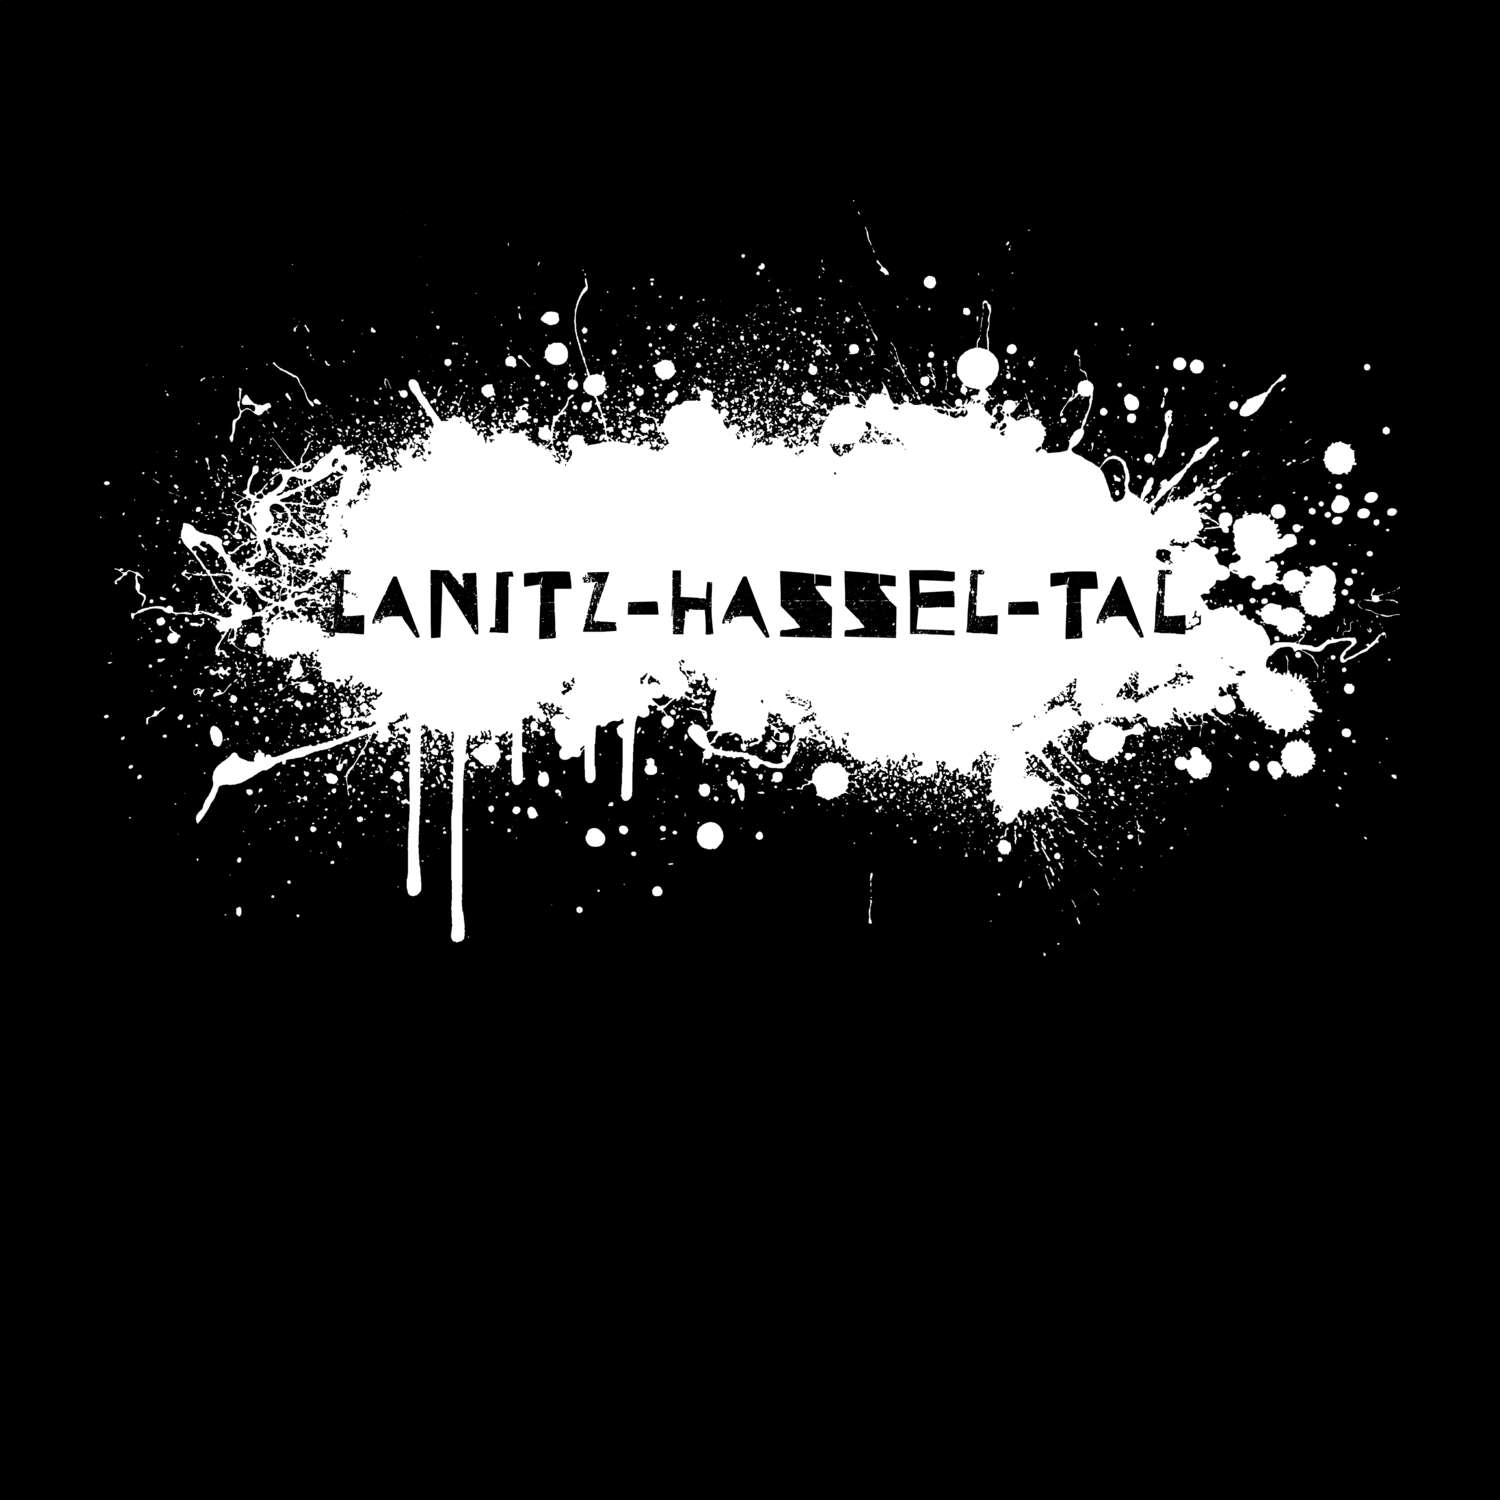 Lanitz-Hassel-Tal T-Shirt »Paint Splash Punk«